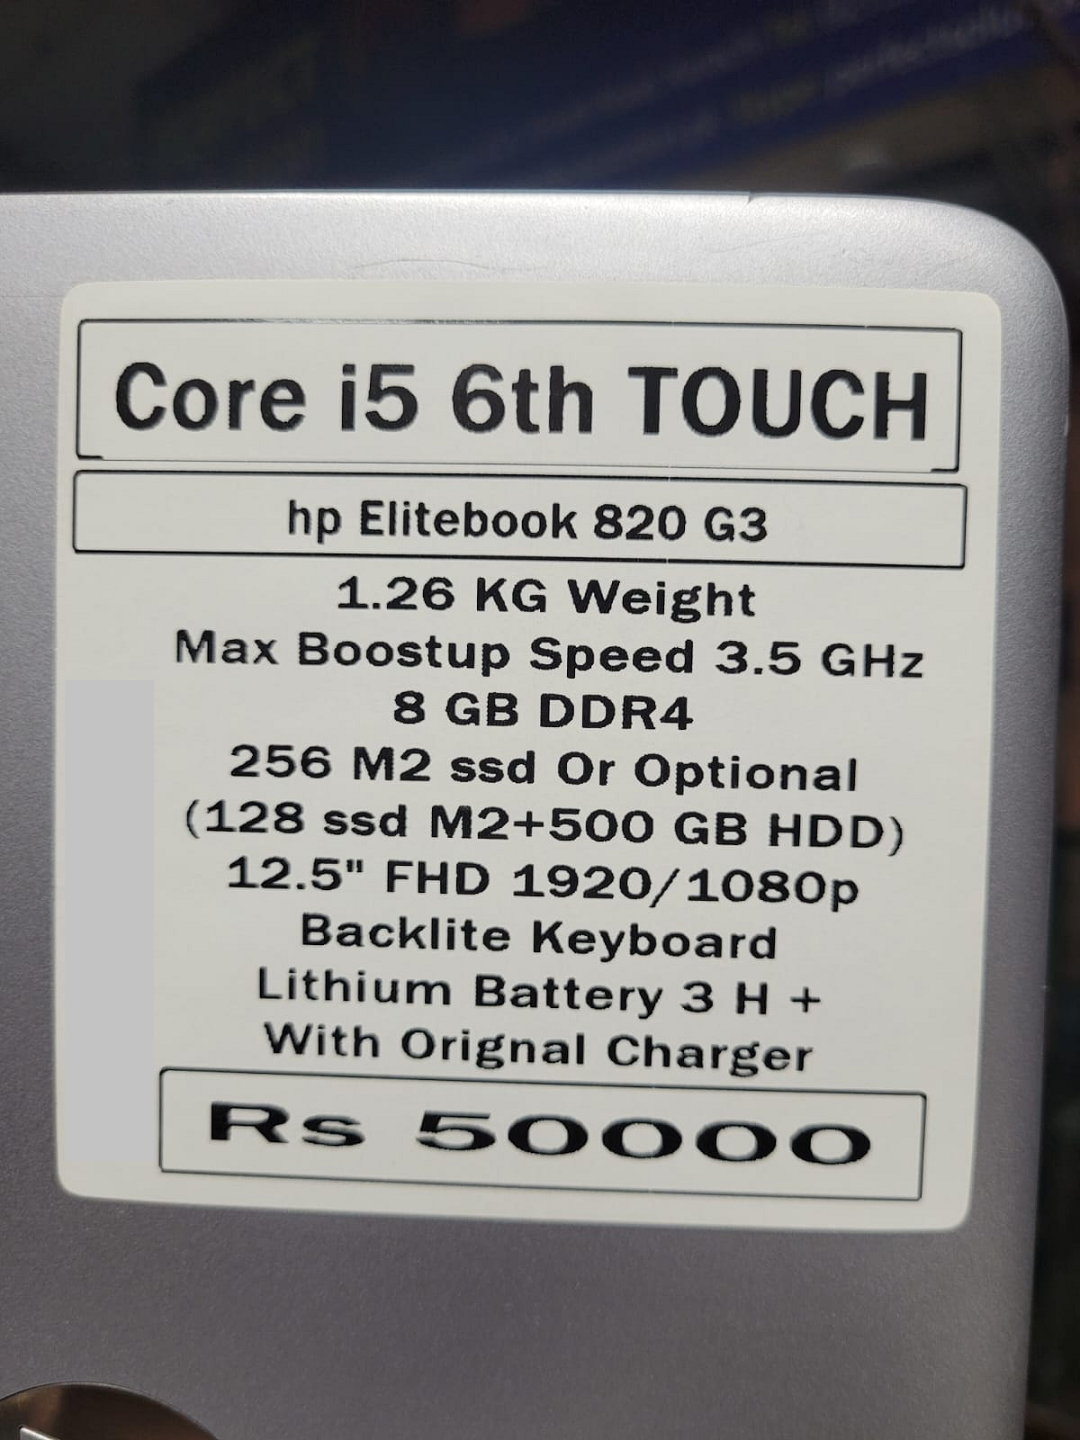 hp elitebook 820 G3 core i5 6th generation price in pakistan